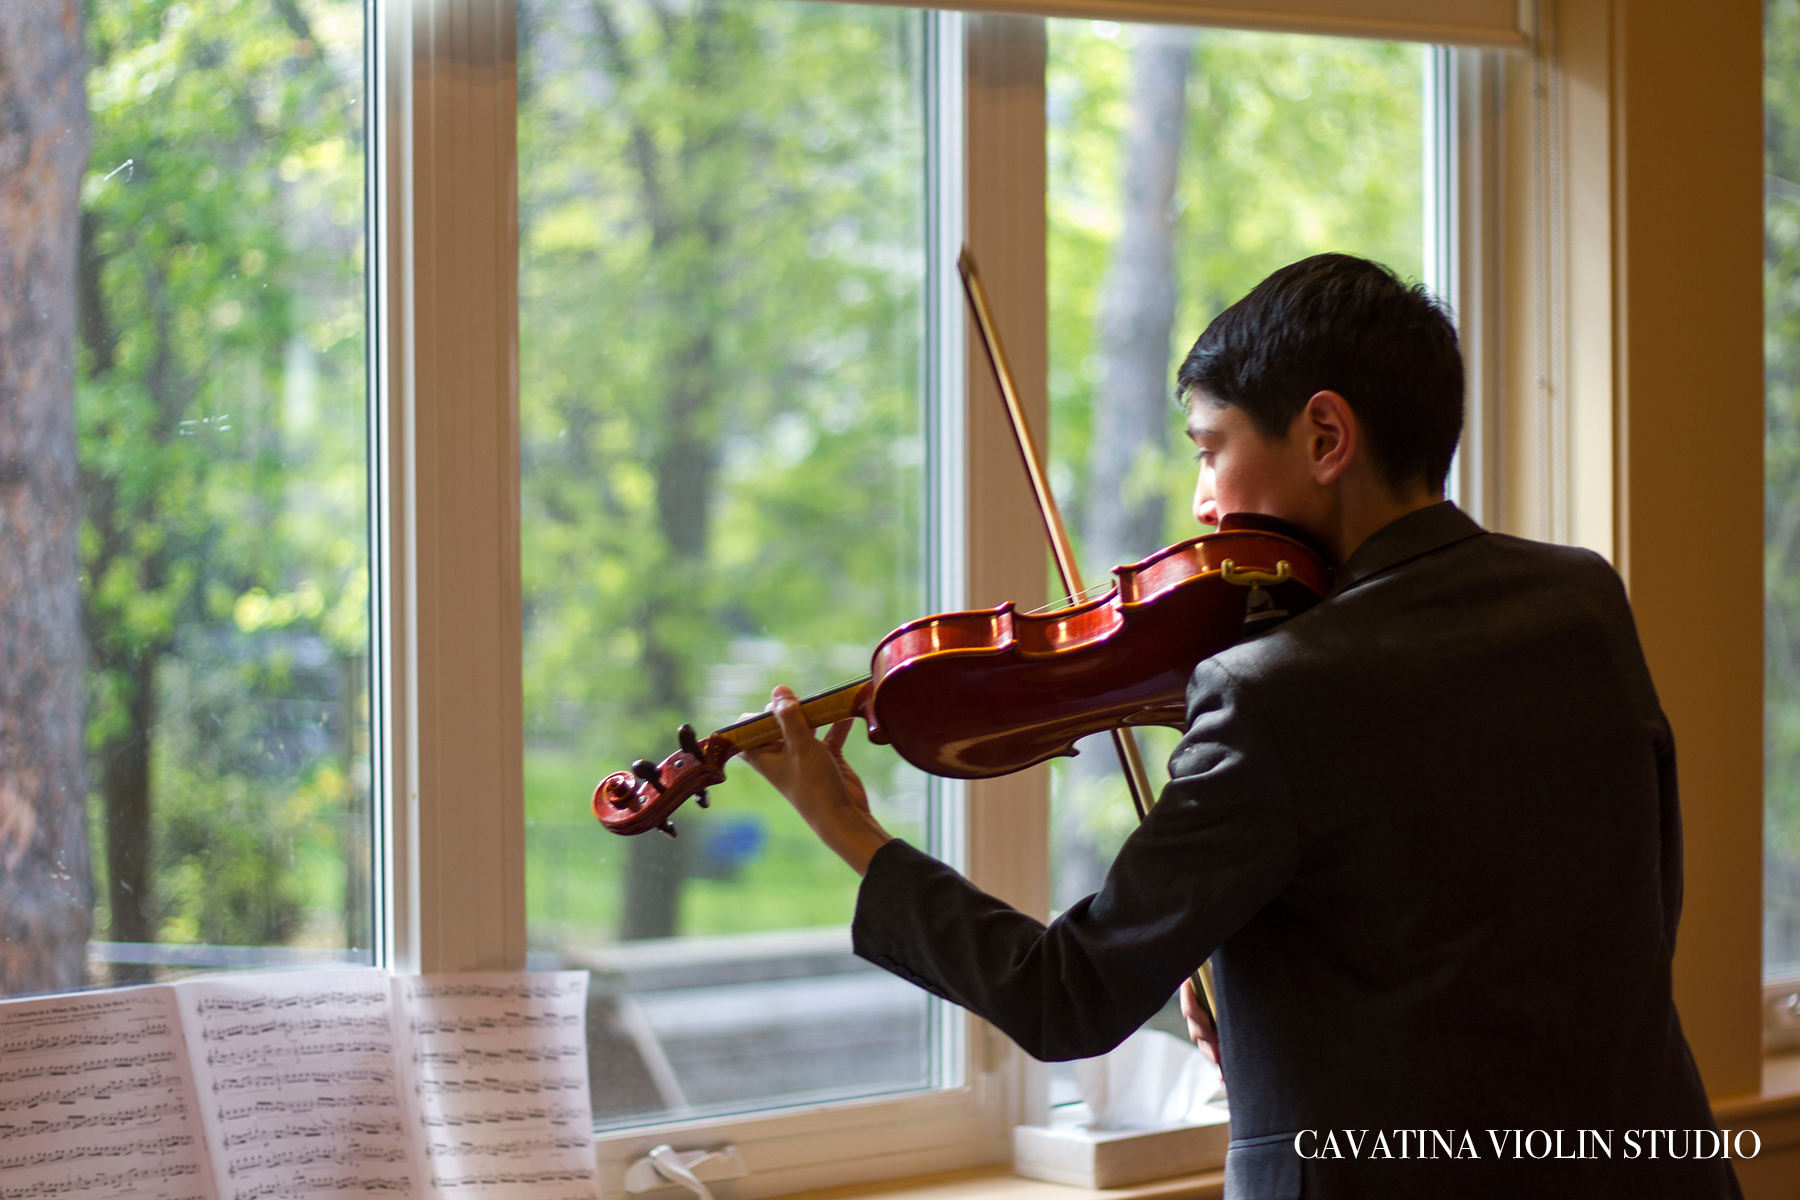 Cavatina Violin Studio - Spring Recital 2017